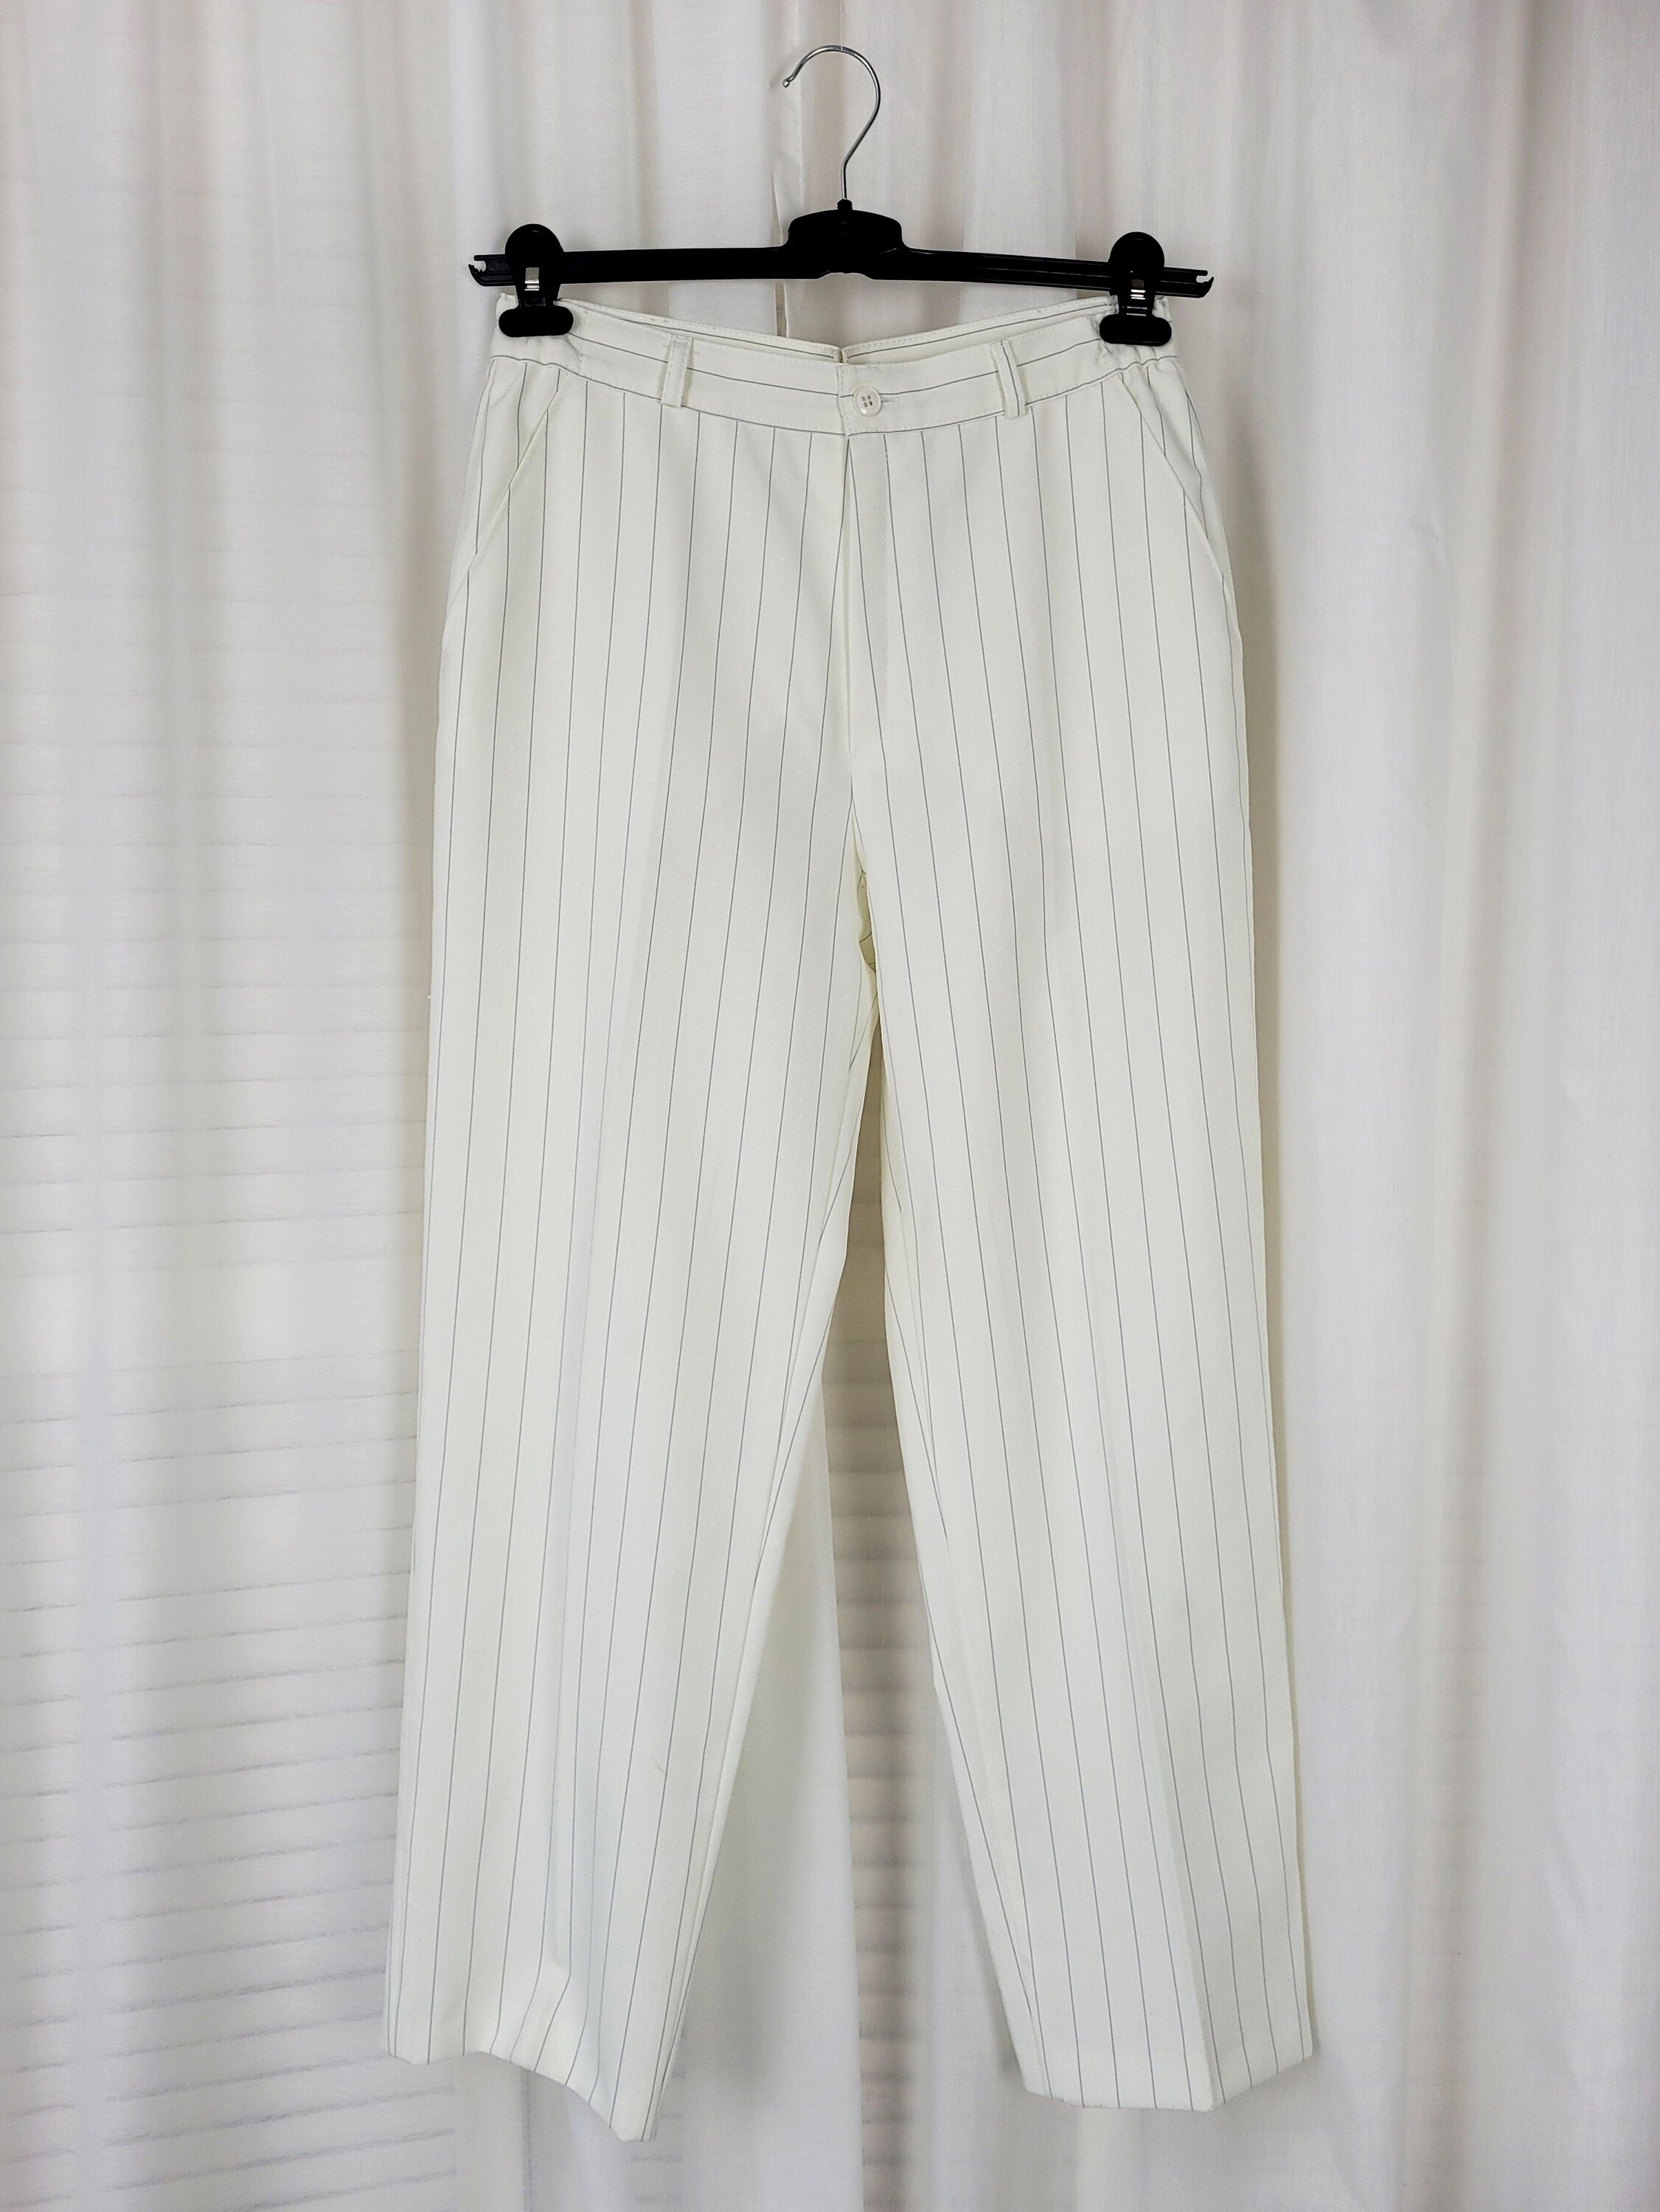 Vintage 90s white striped high waist smart formal pants